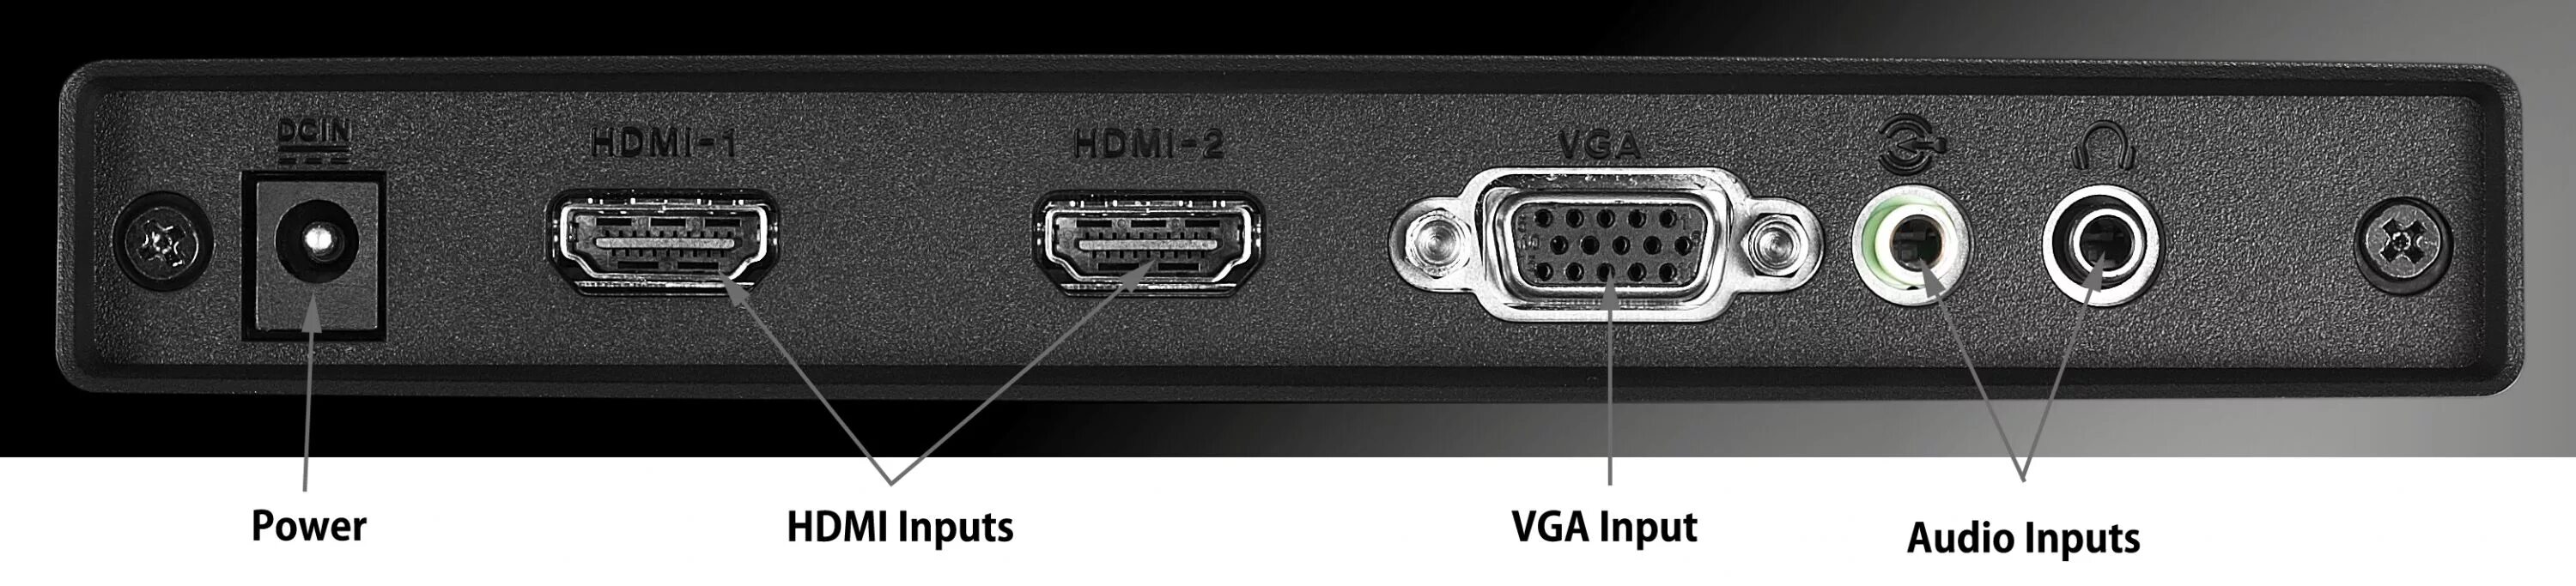 Монитор ASUS Designo 23" mx239h. Dell мониторы 27 разъем HDMI. Монитор 10 дюймов HDMI in-out. Разъем 2 HDM ТВ.